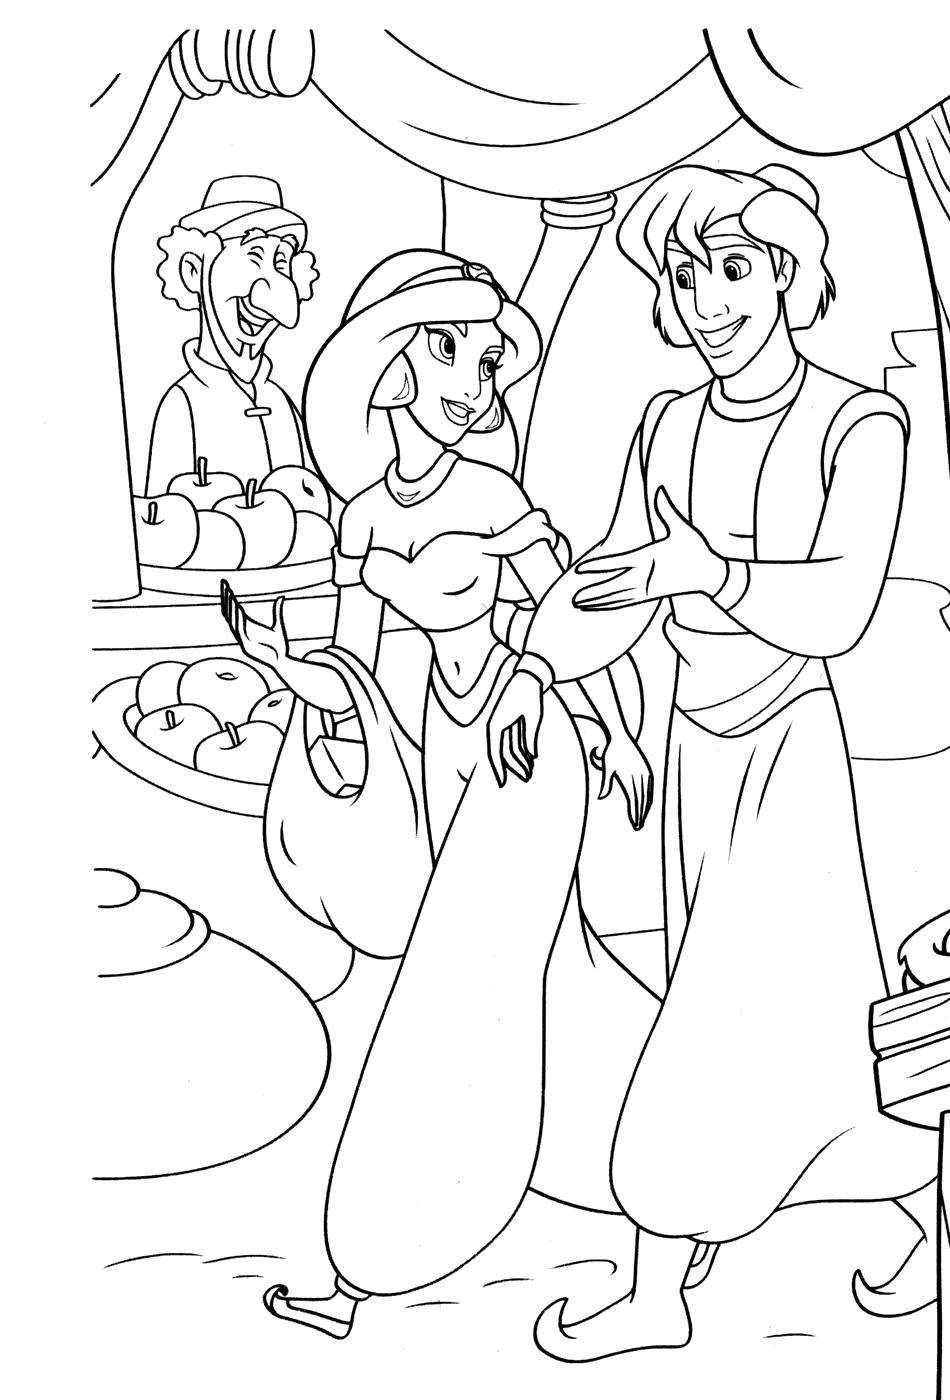 Coloring Jasmine and Alladin. Category Aladdin. Tags:  Disney, Aladdin, Jasmine.